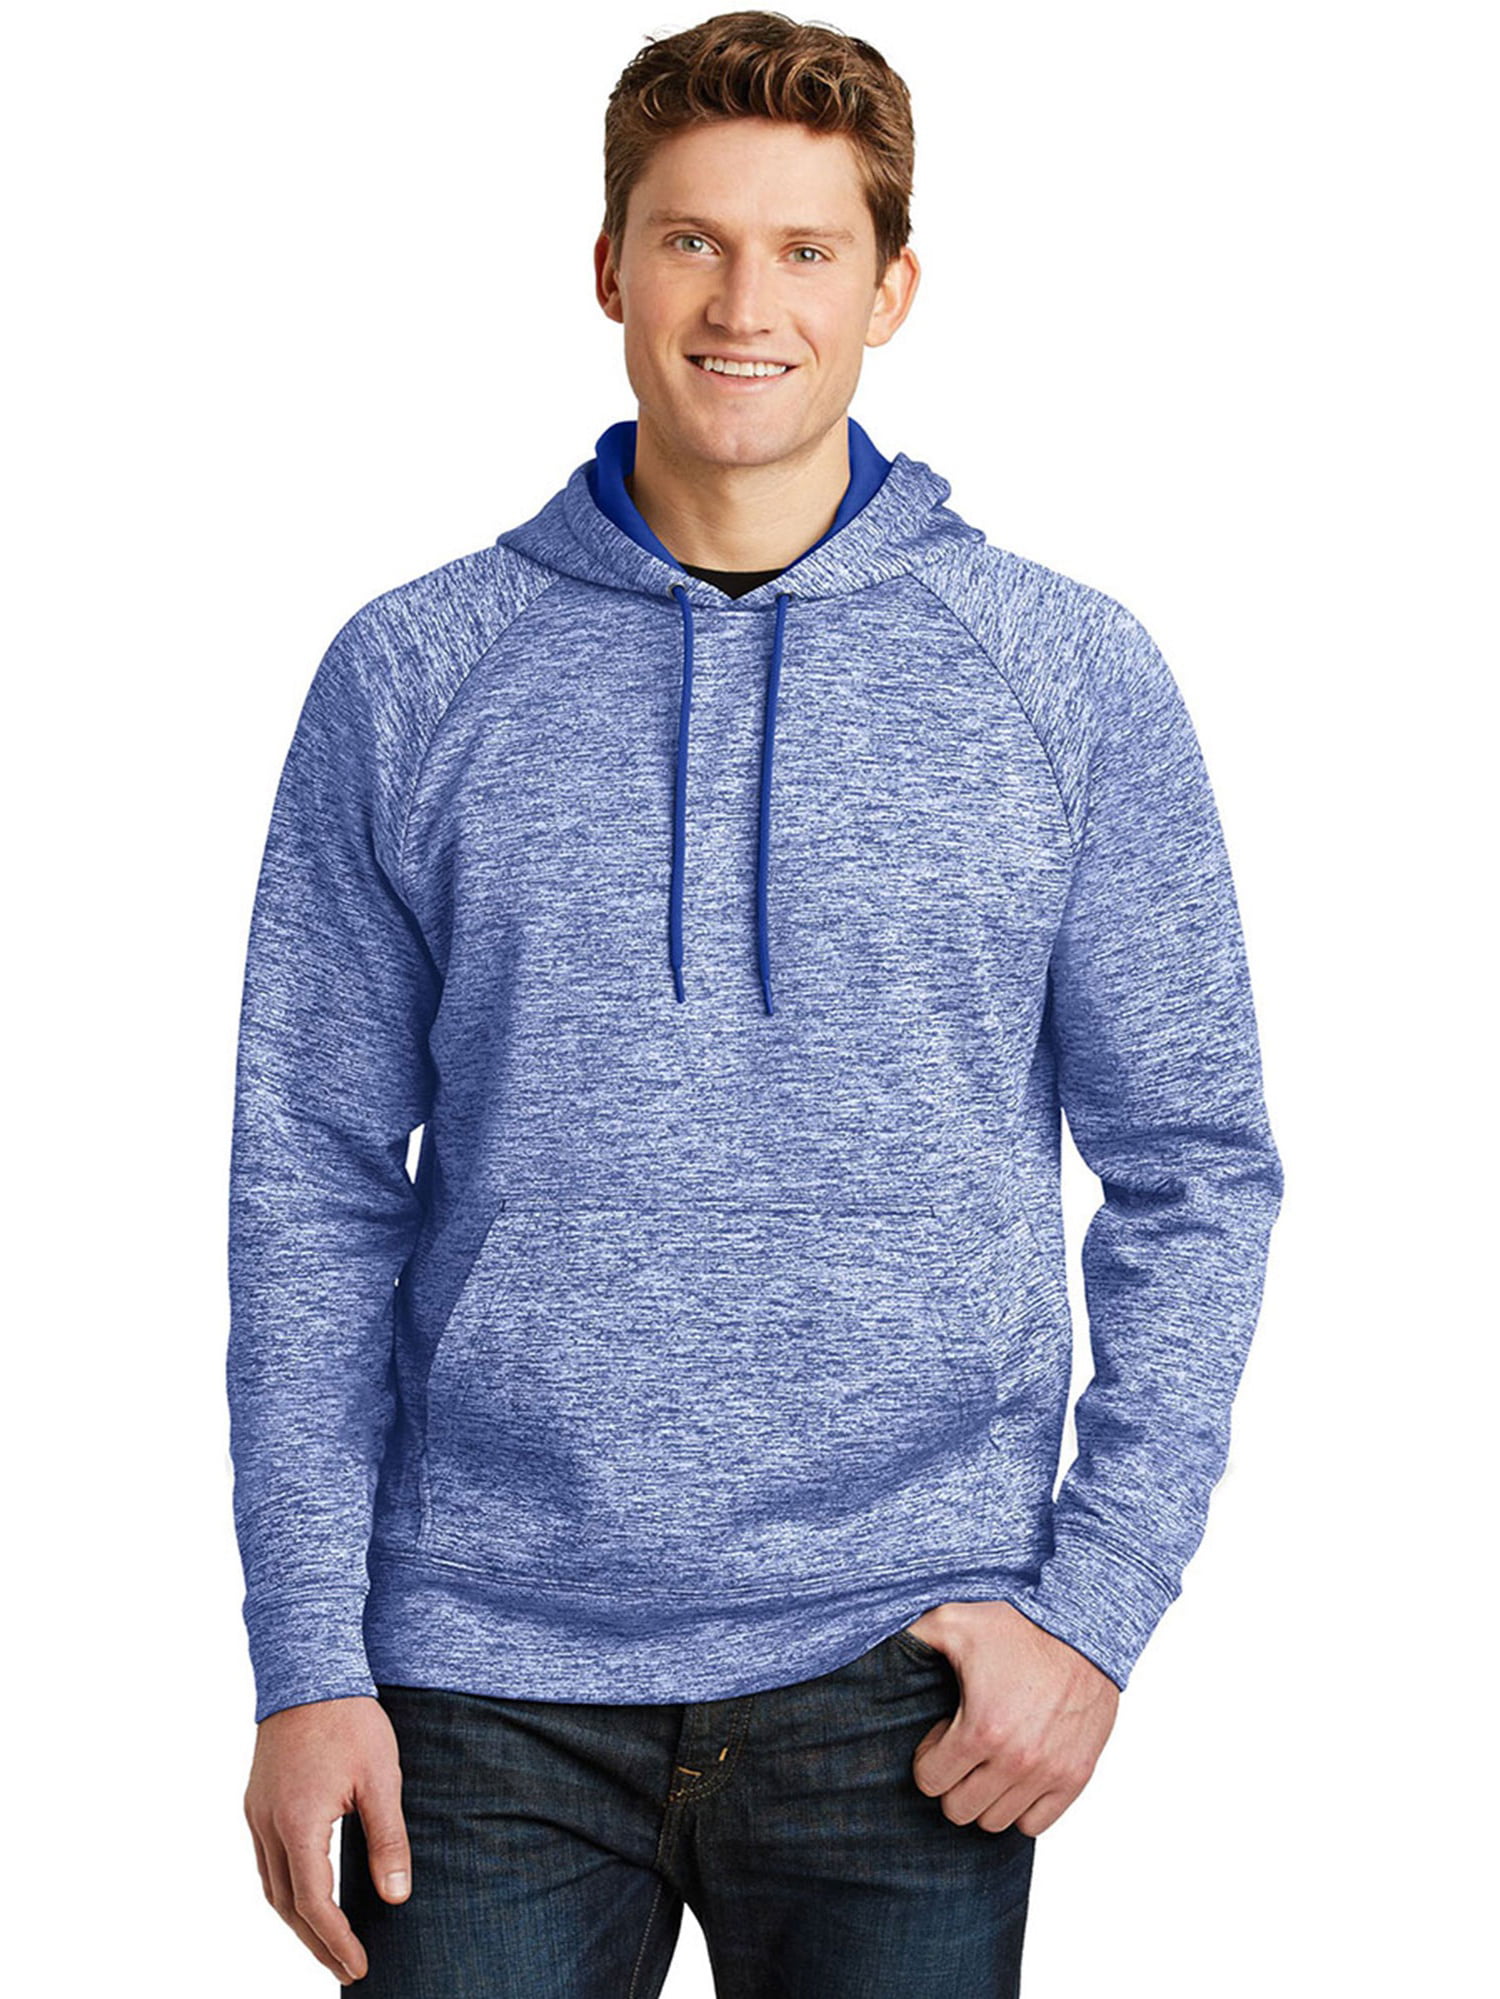 Sport-Tek - Sport-Tek Men's PosiCharge Fleece Hooded Pullover - Walmart